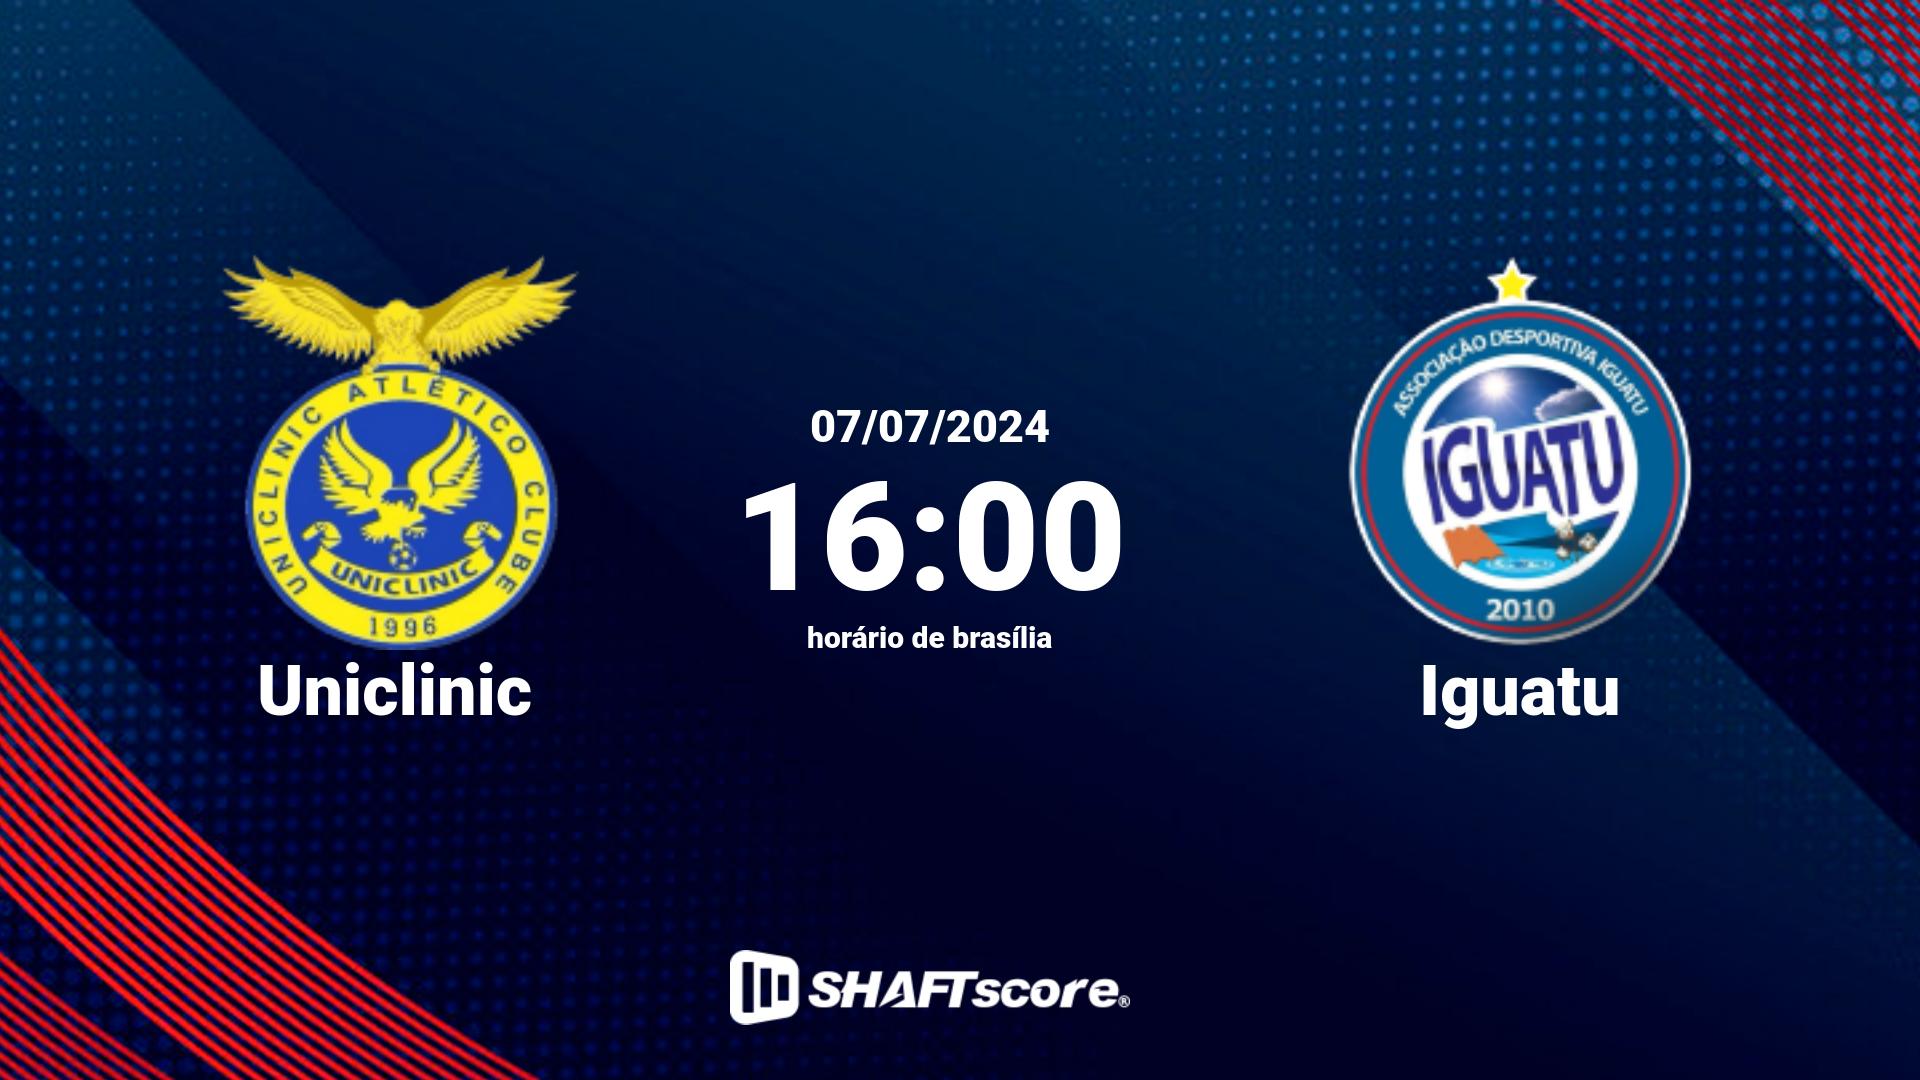 Estatísticas do jogo Uniclinic vs Iguatu 07.07 16:00